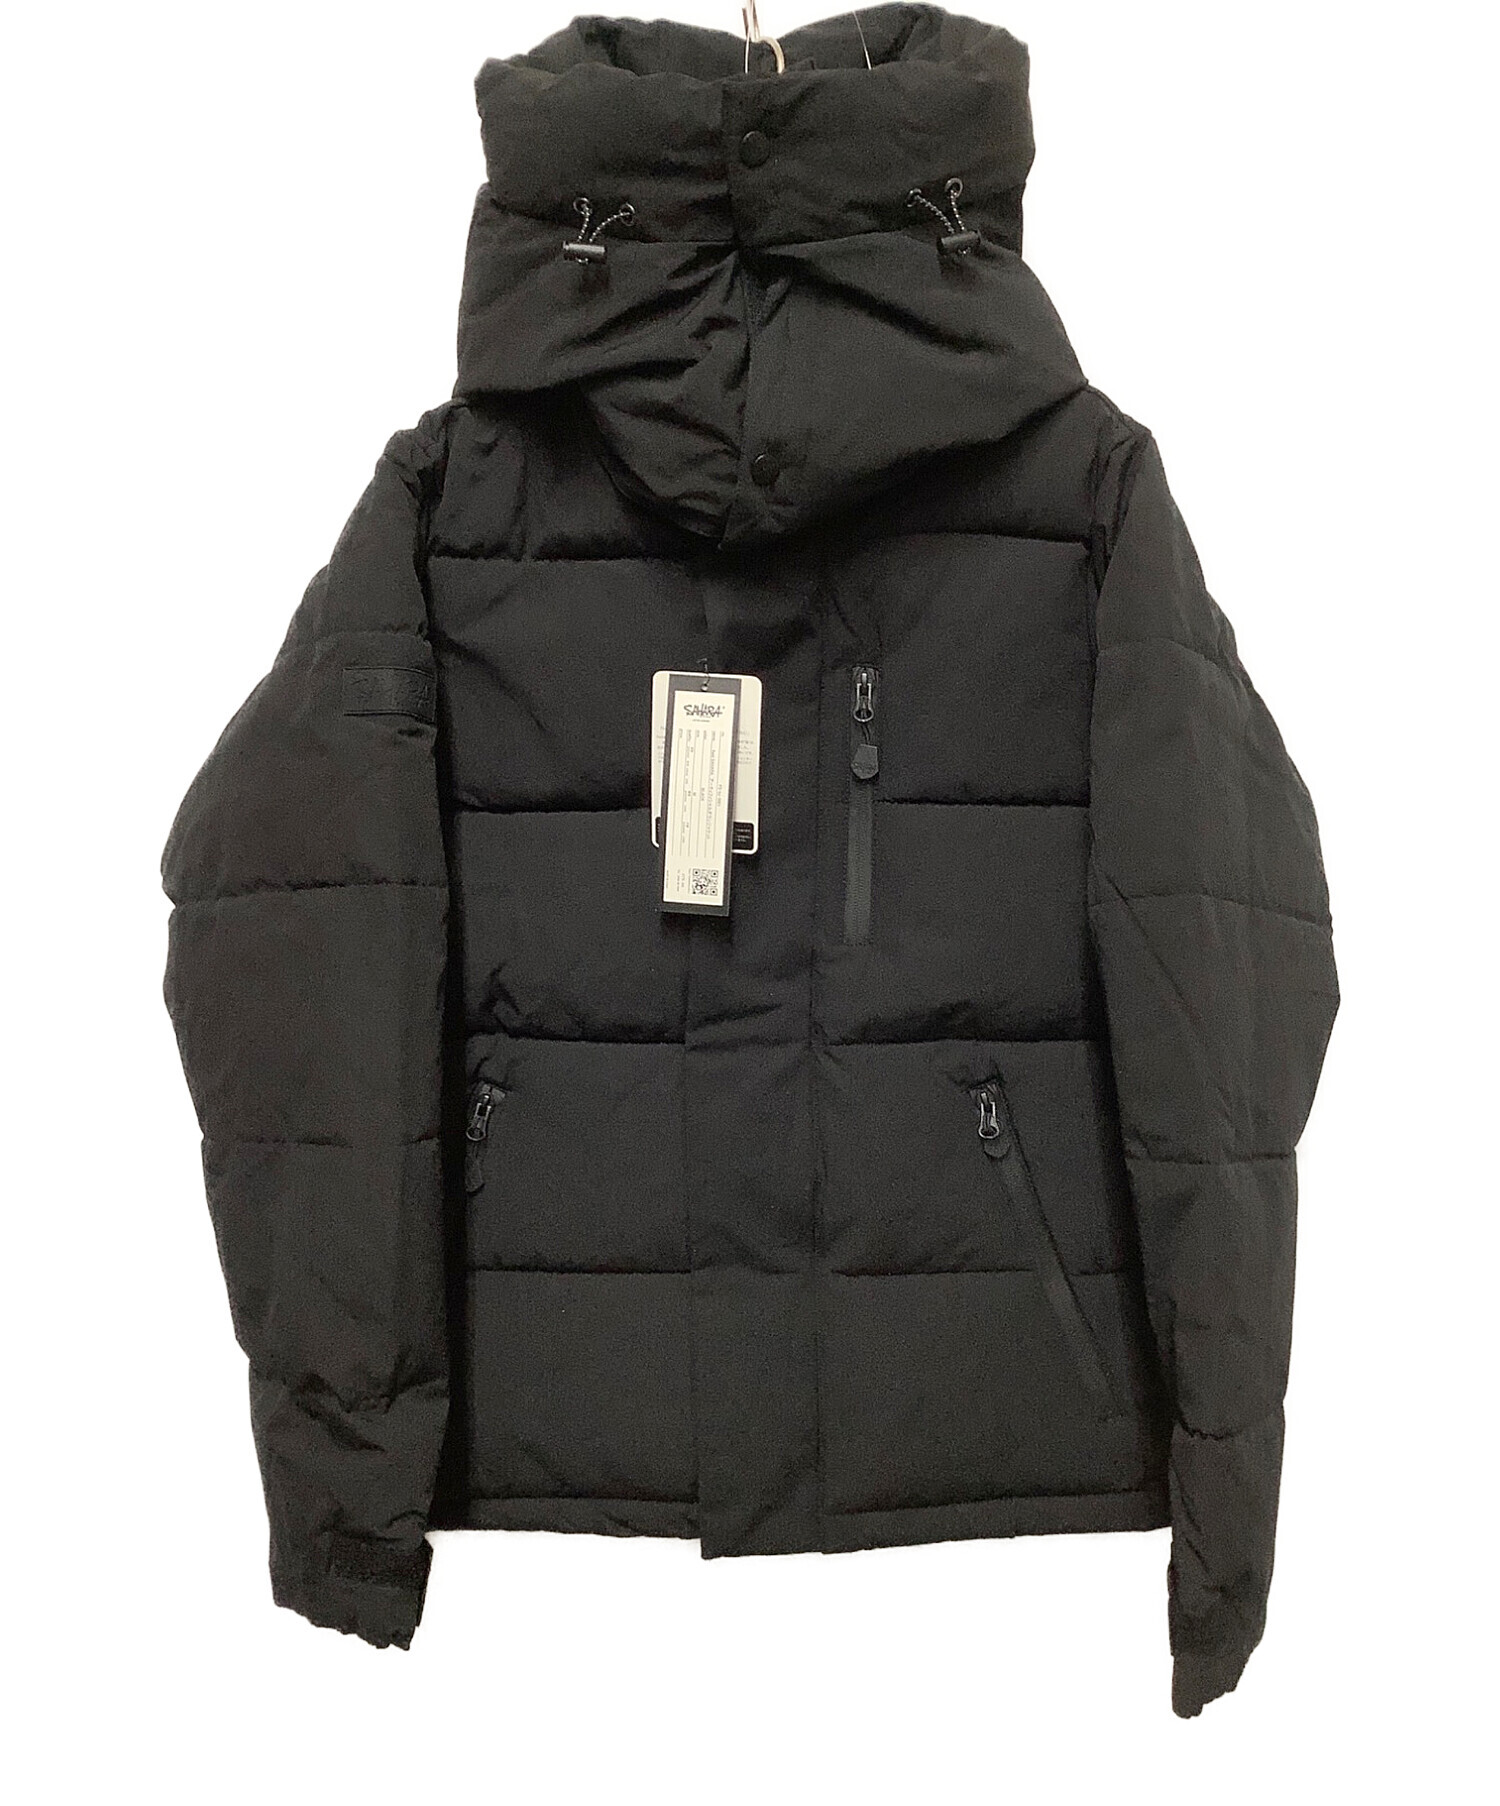 fieldSAHARA (フィールドサハラ) アーティフィシャルダウンジャケット ブラック サイズ:Mサイズ 未使用品